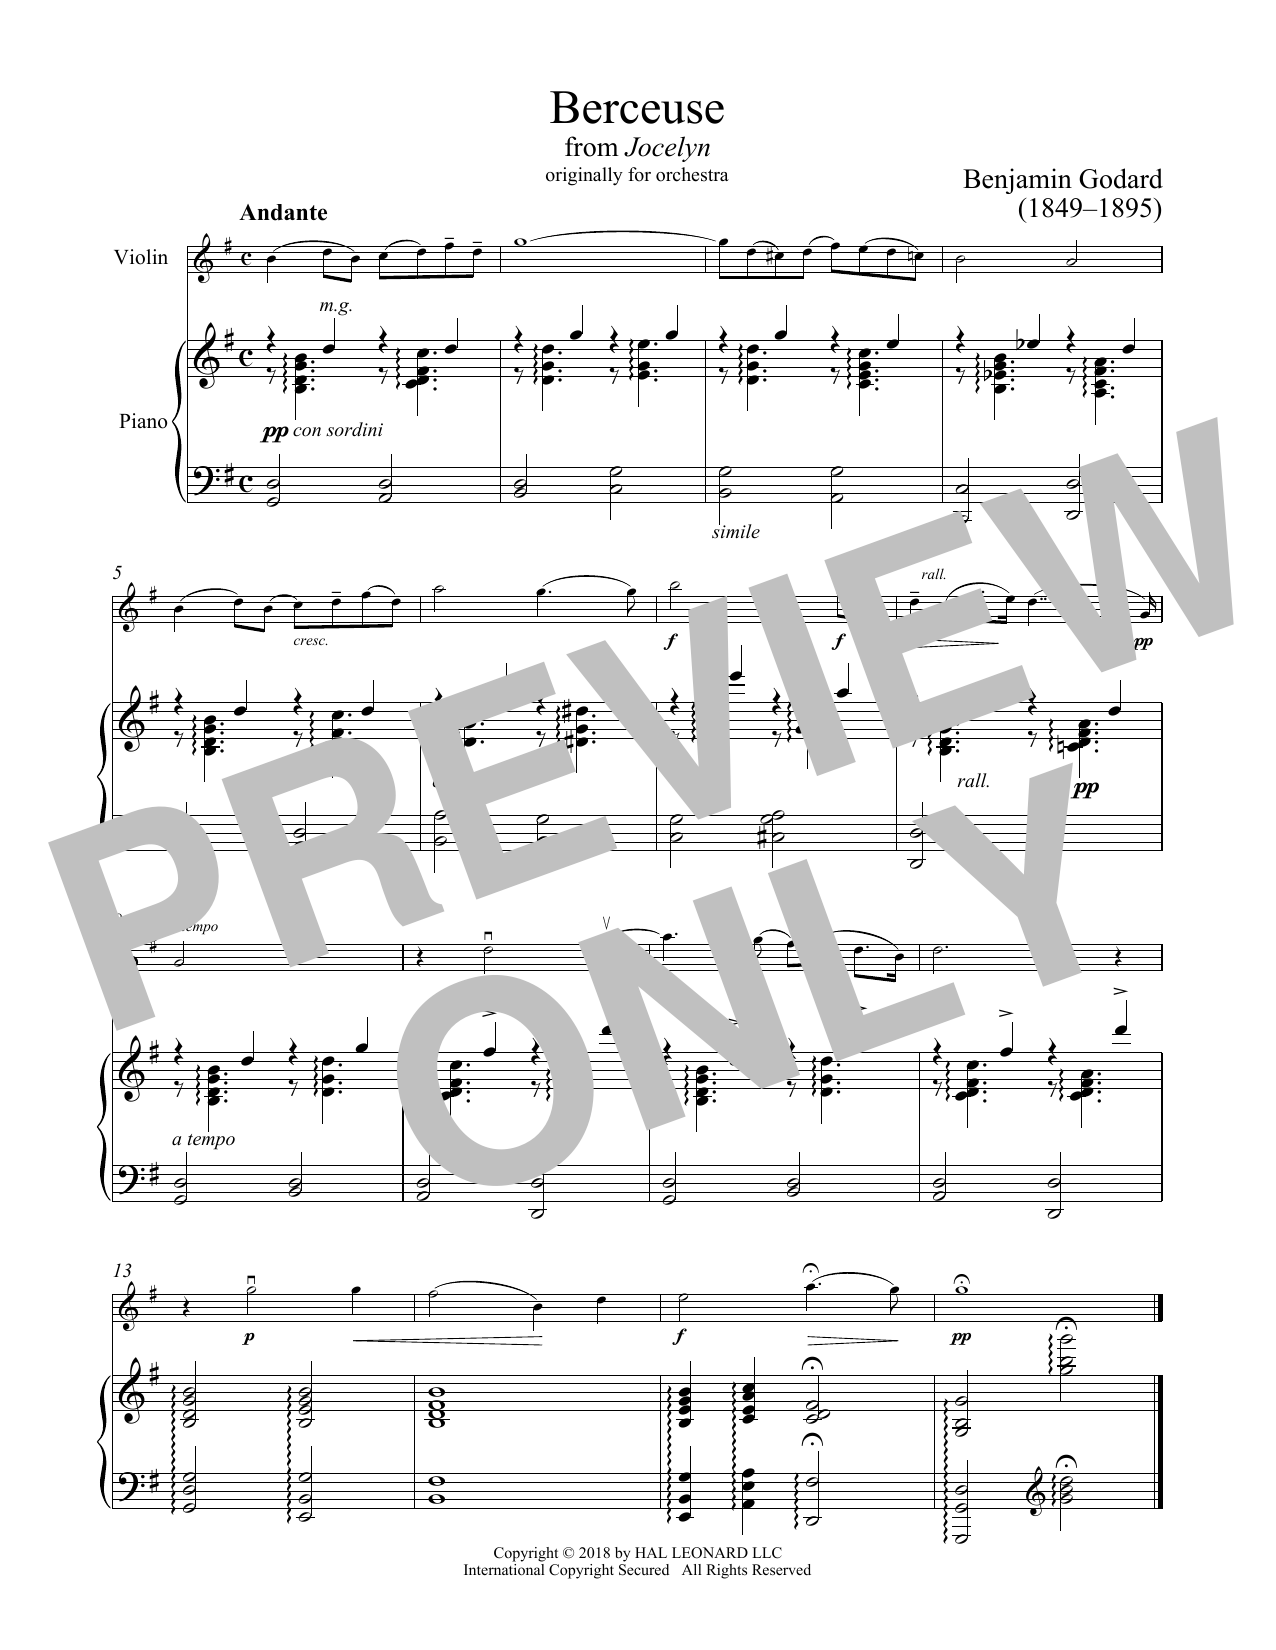 Benjamin Godard Berceuse Sheet Music Notes & Chords for Violin and Piano - Download or Print PDF